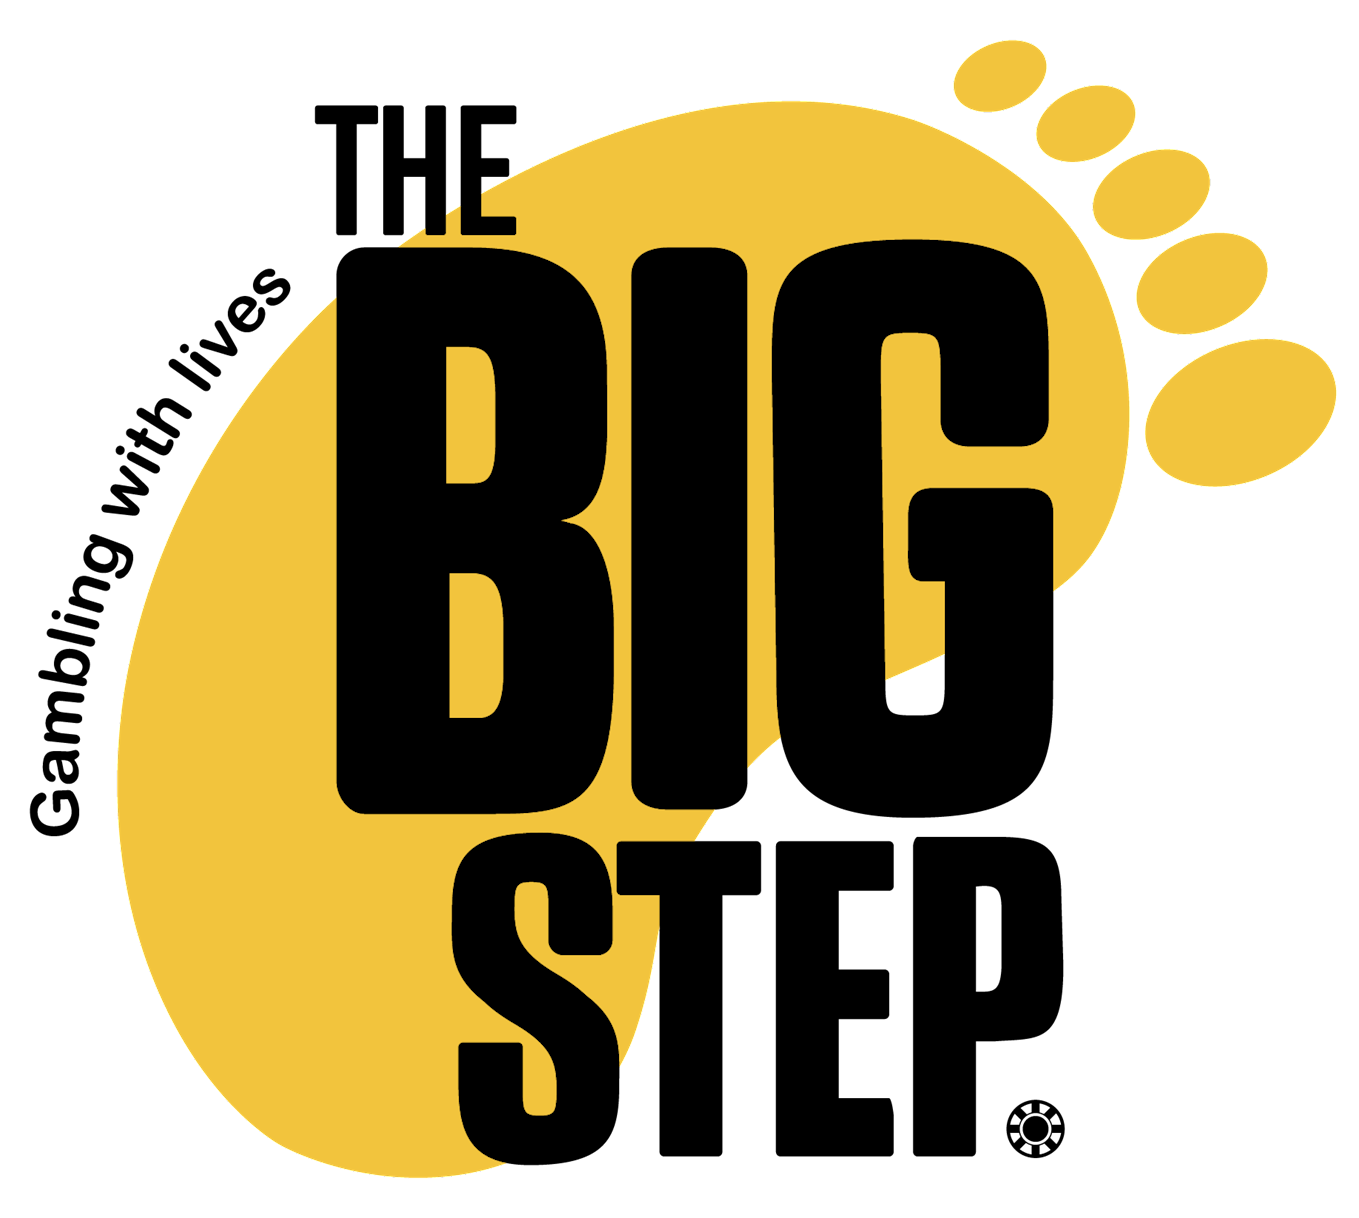 Big step logo_yellow foot.png